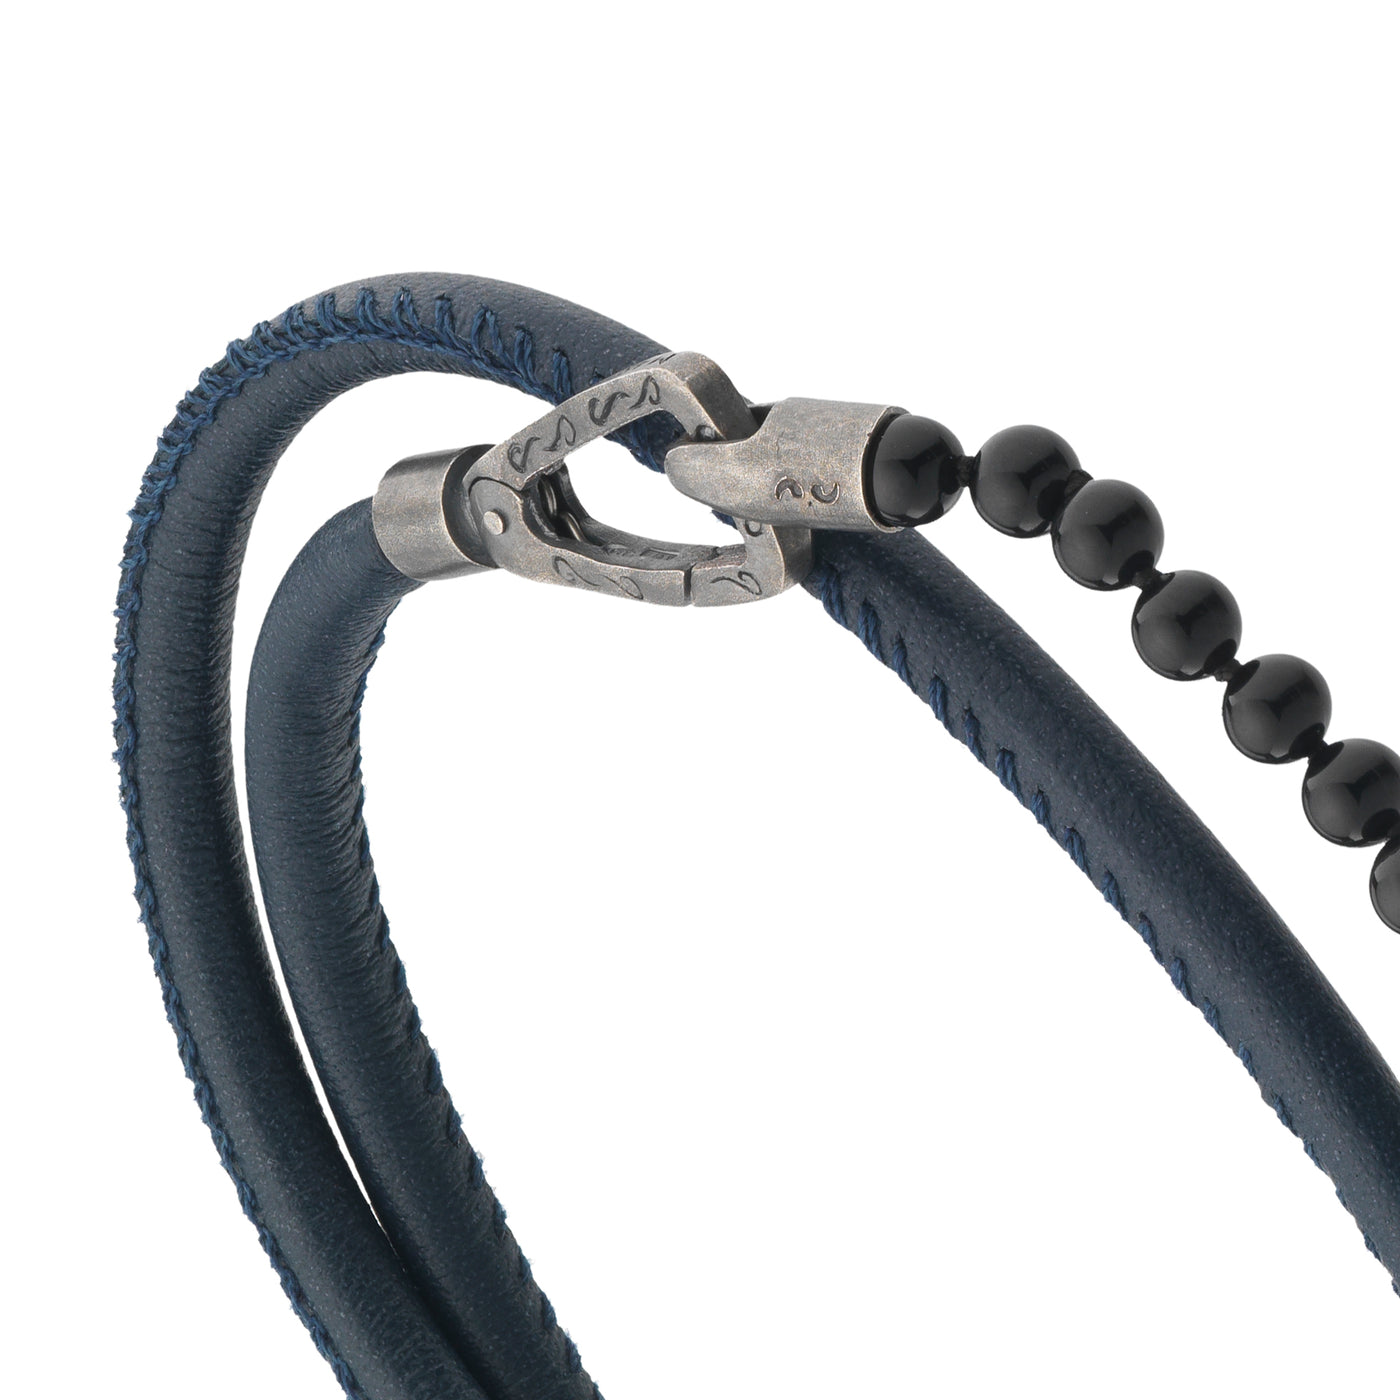 Mini Onyx Beads Double Wrap Bracelet with blue leather